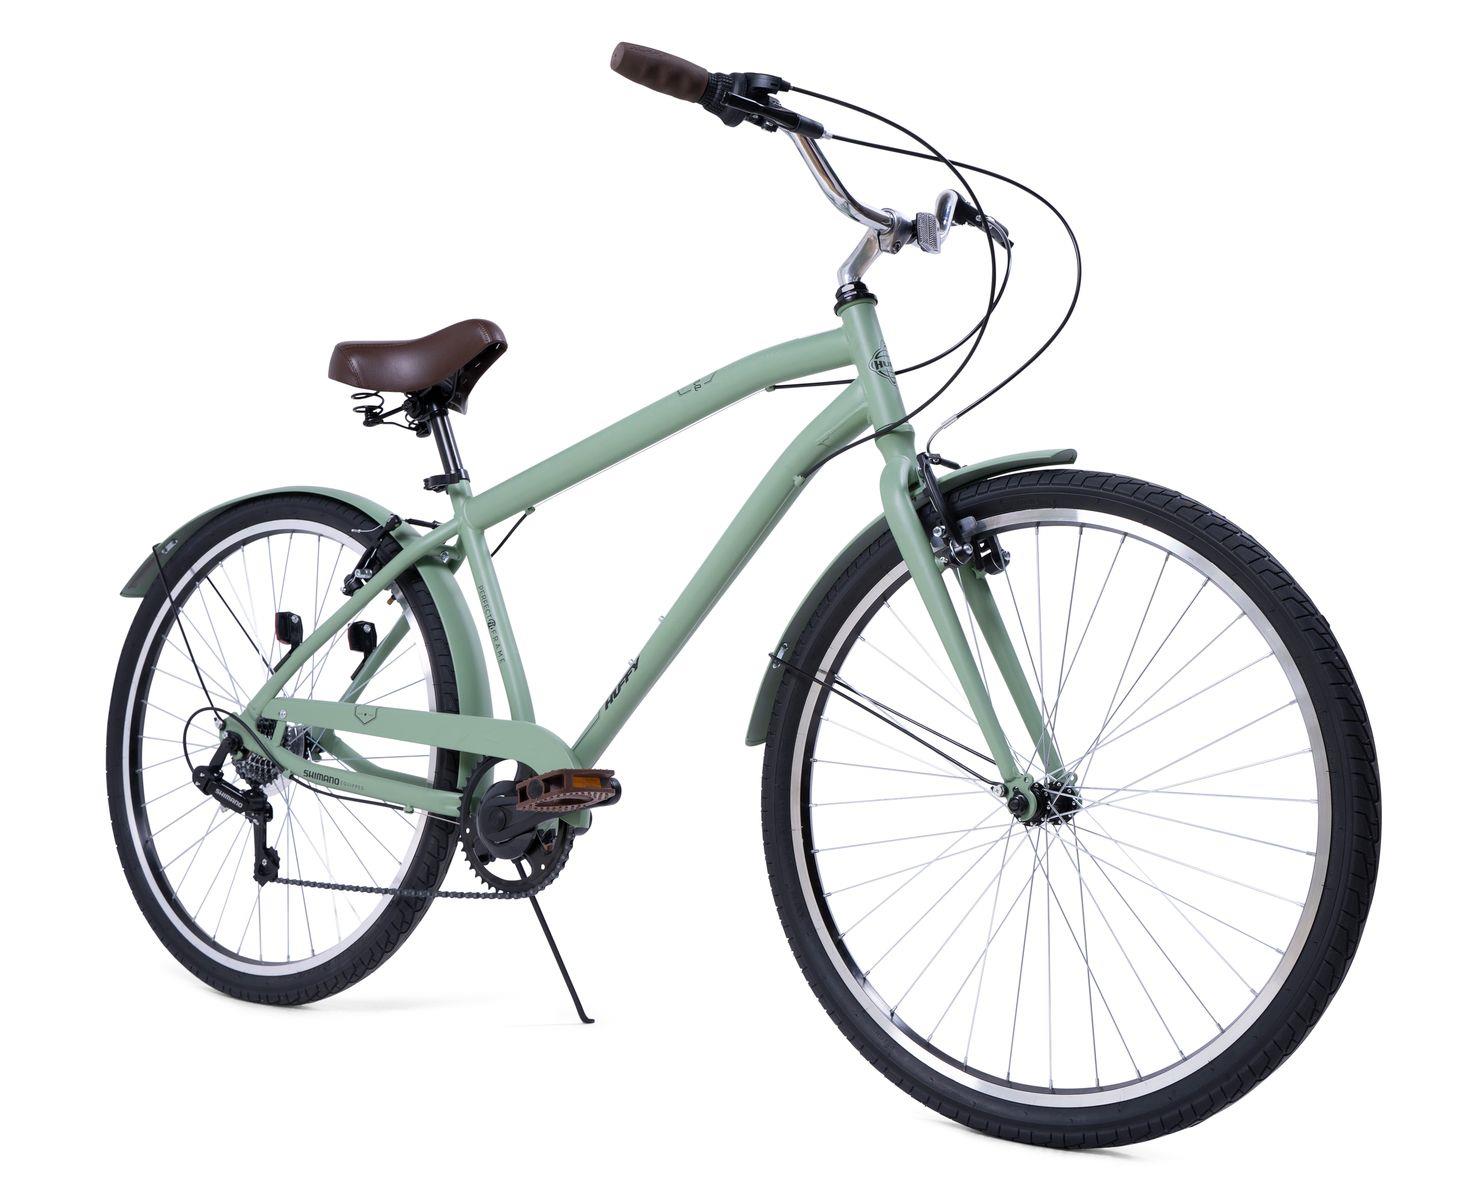 Huffy Sienna 27.5" Vintage велосипед, Shimano 7-speed index, Зеленый